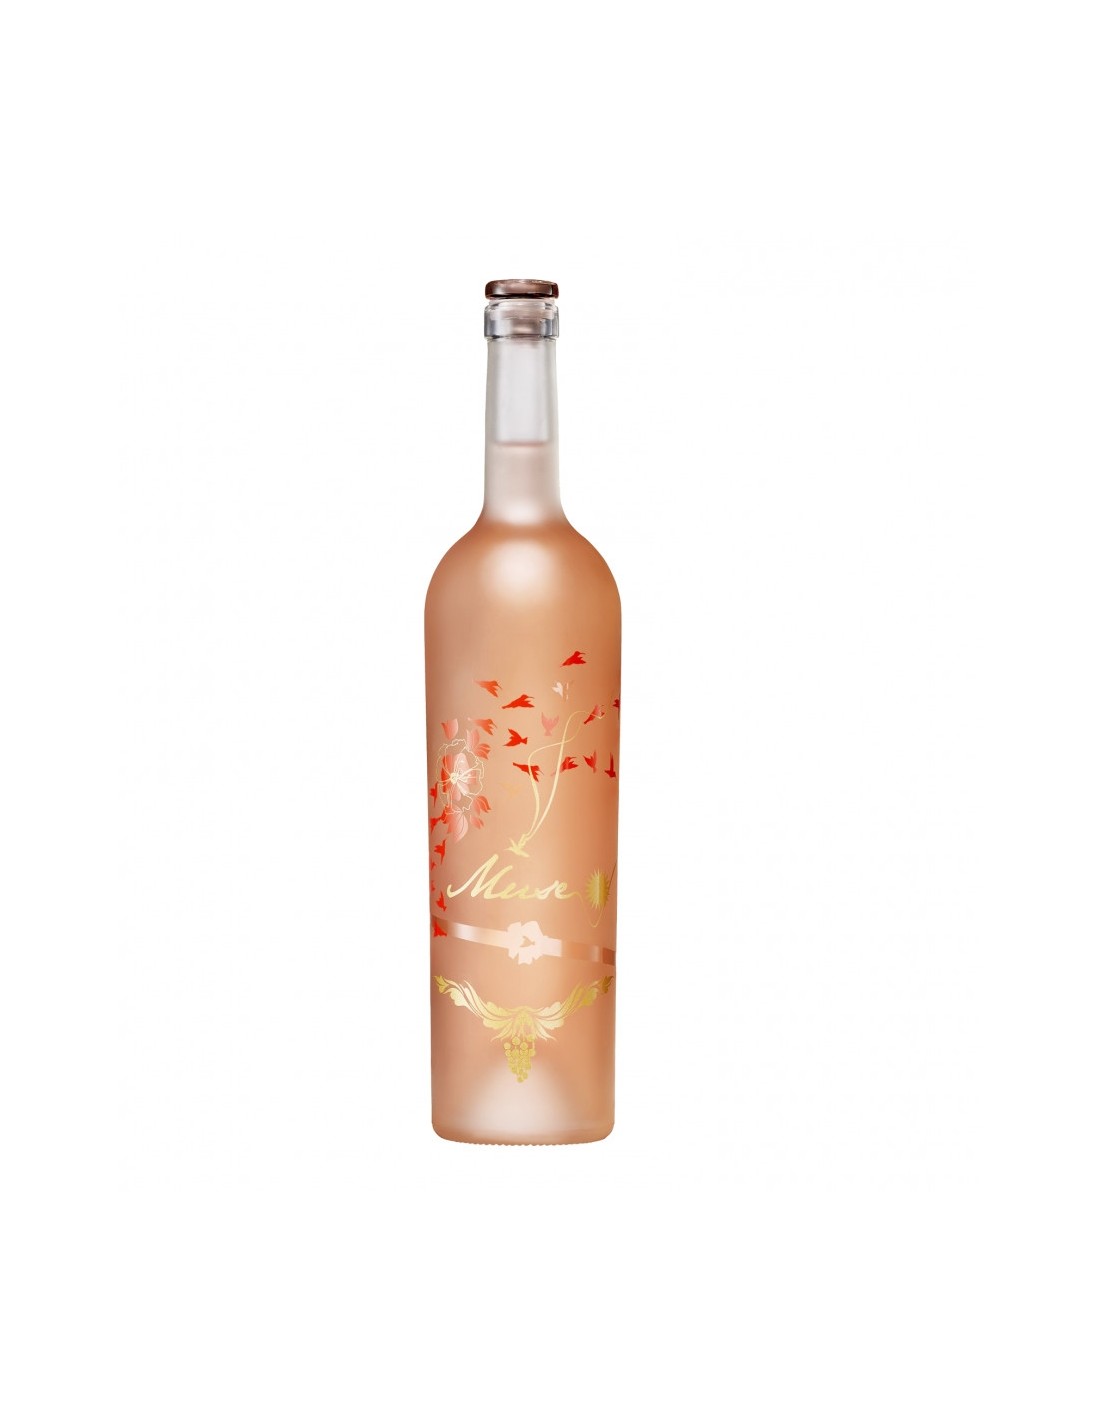 Vin roze sec, Cupaj, Muse Day Recas, 0.75L, 12.5% alc., Romania